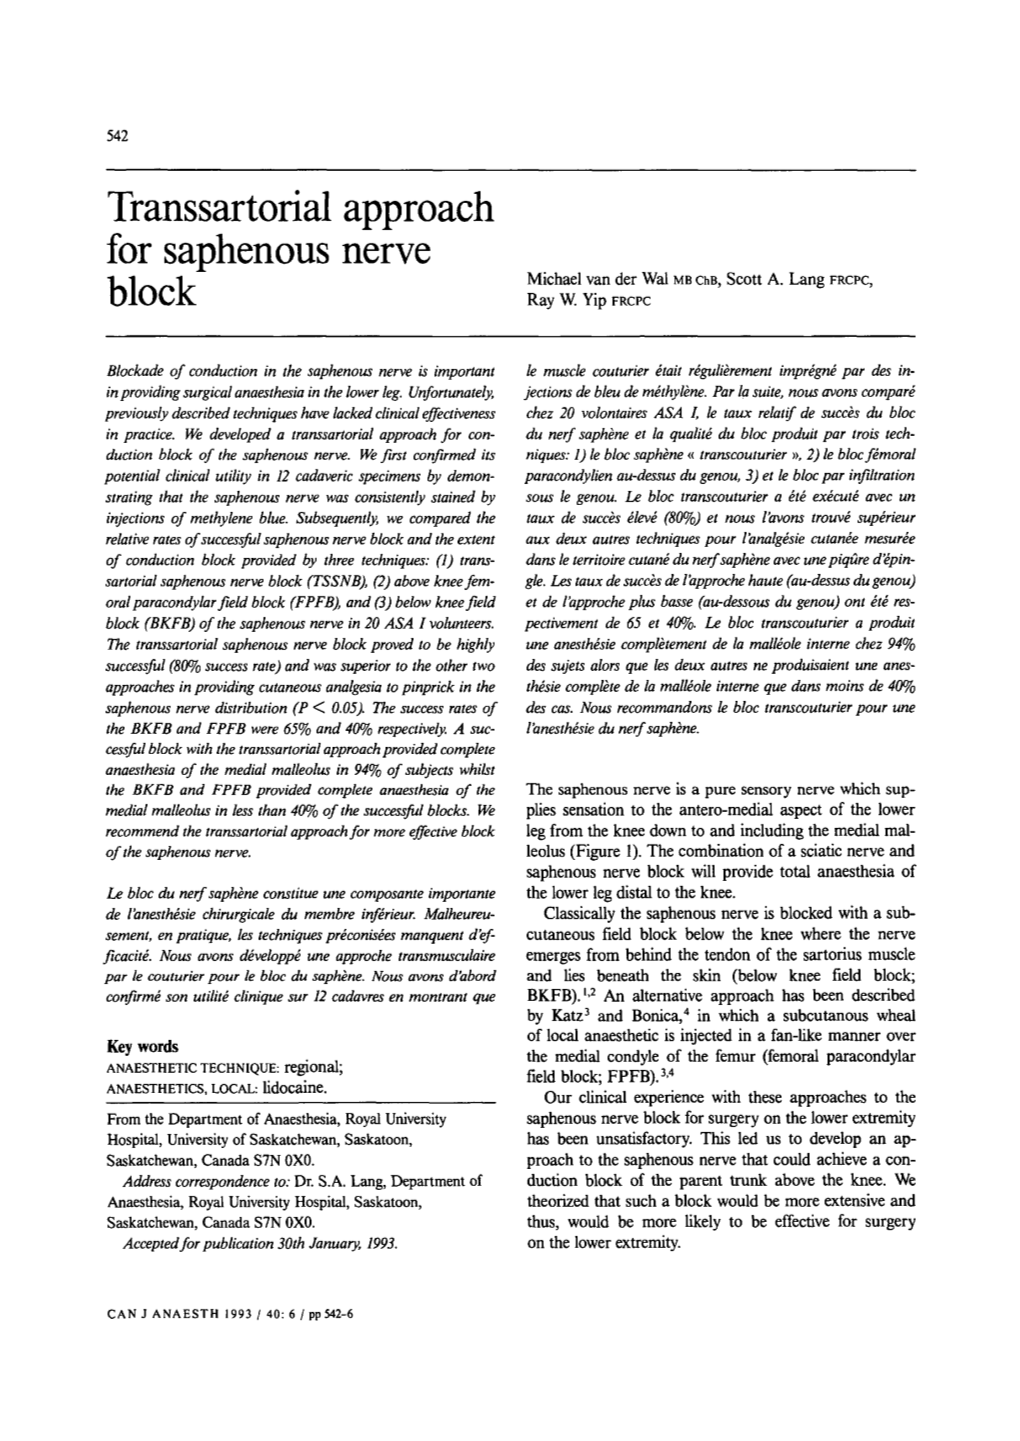 Transsartorial Approach for Saphenous Nerve Block